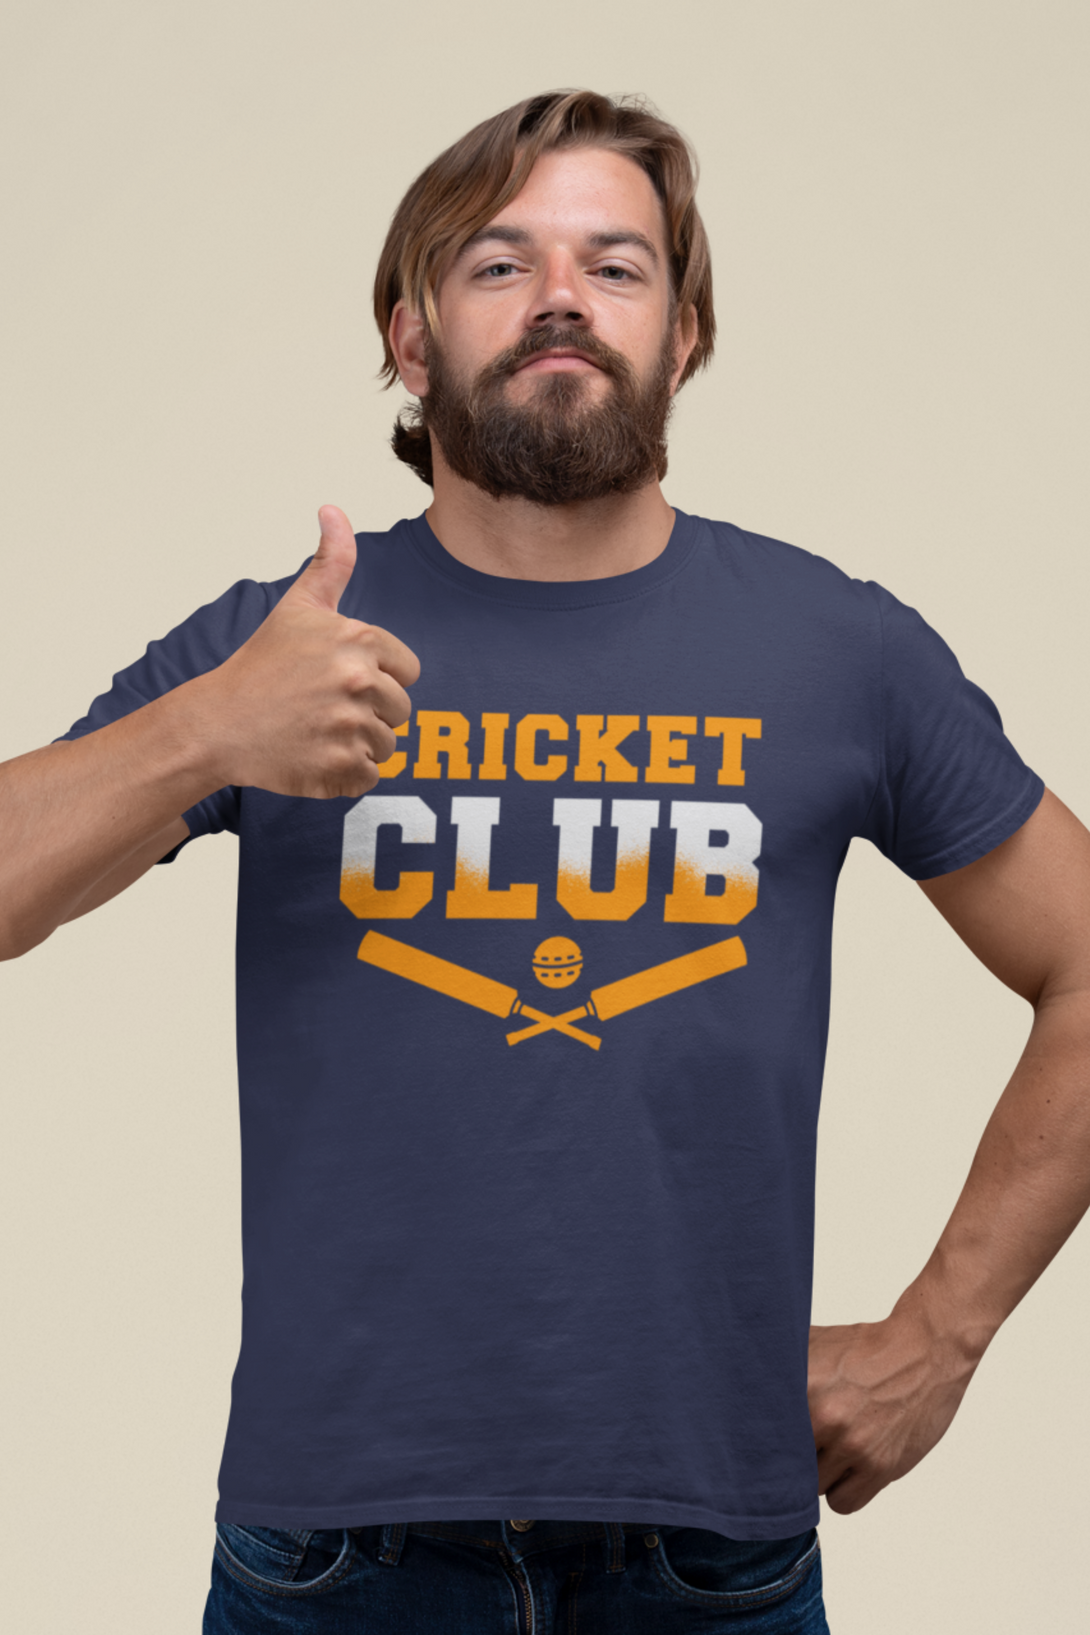 Cricket Club Printed T-Shirt For Men - WowWaves - 4